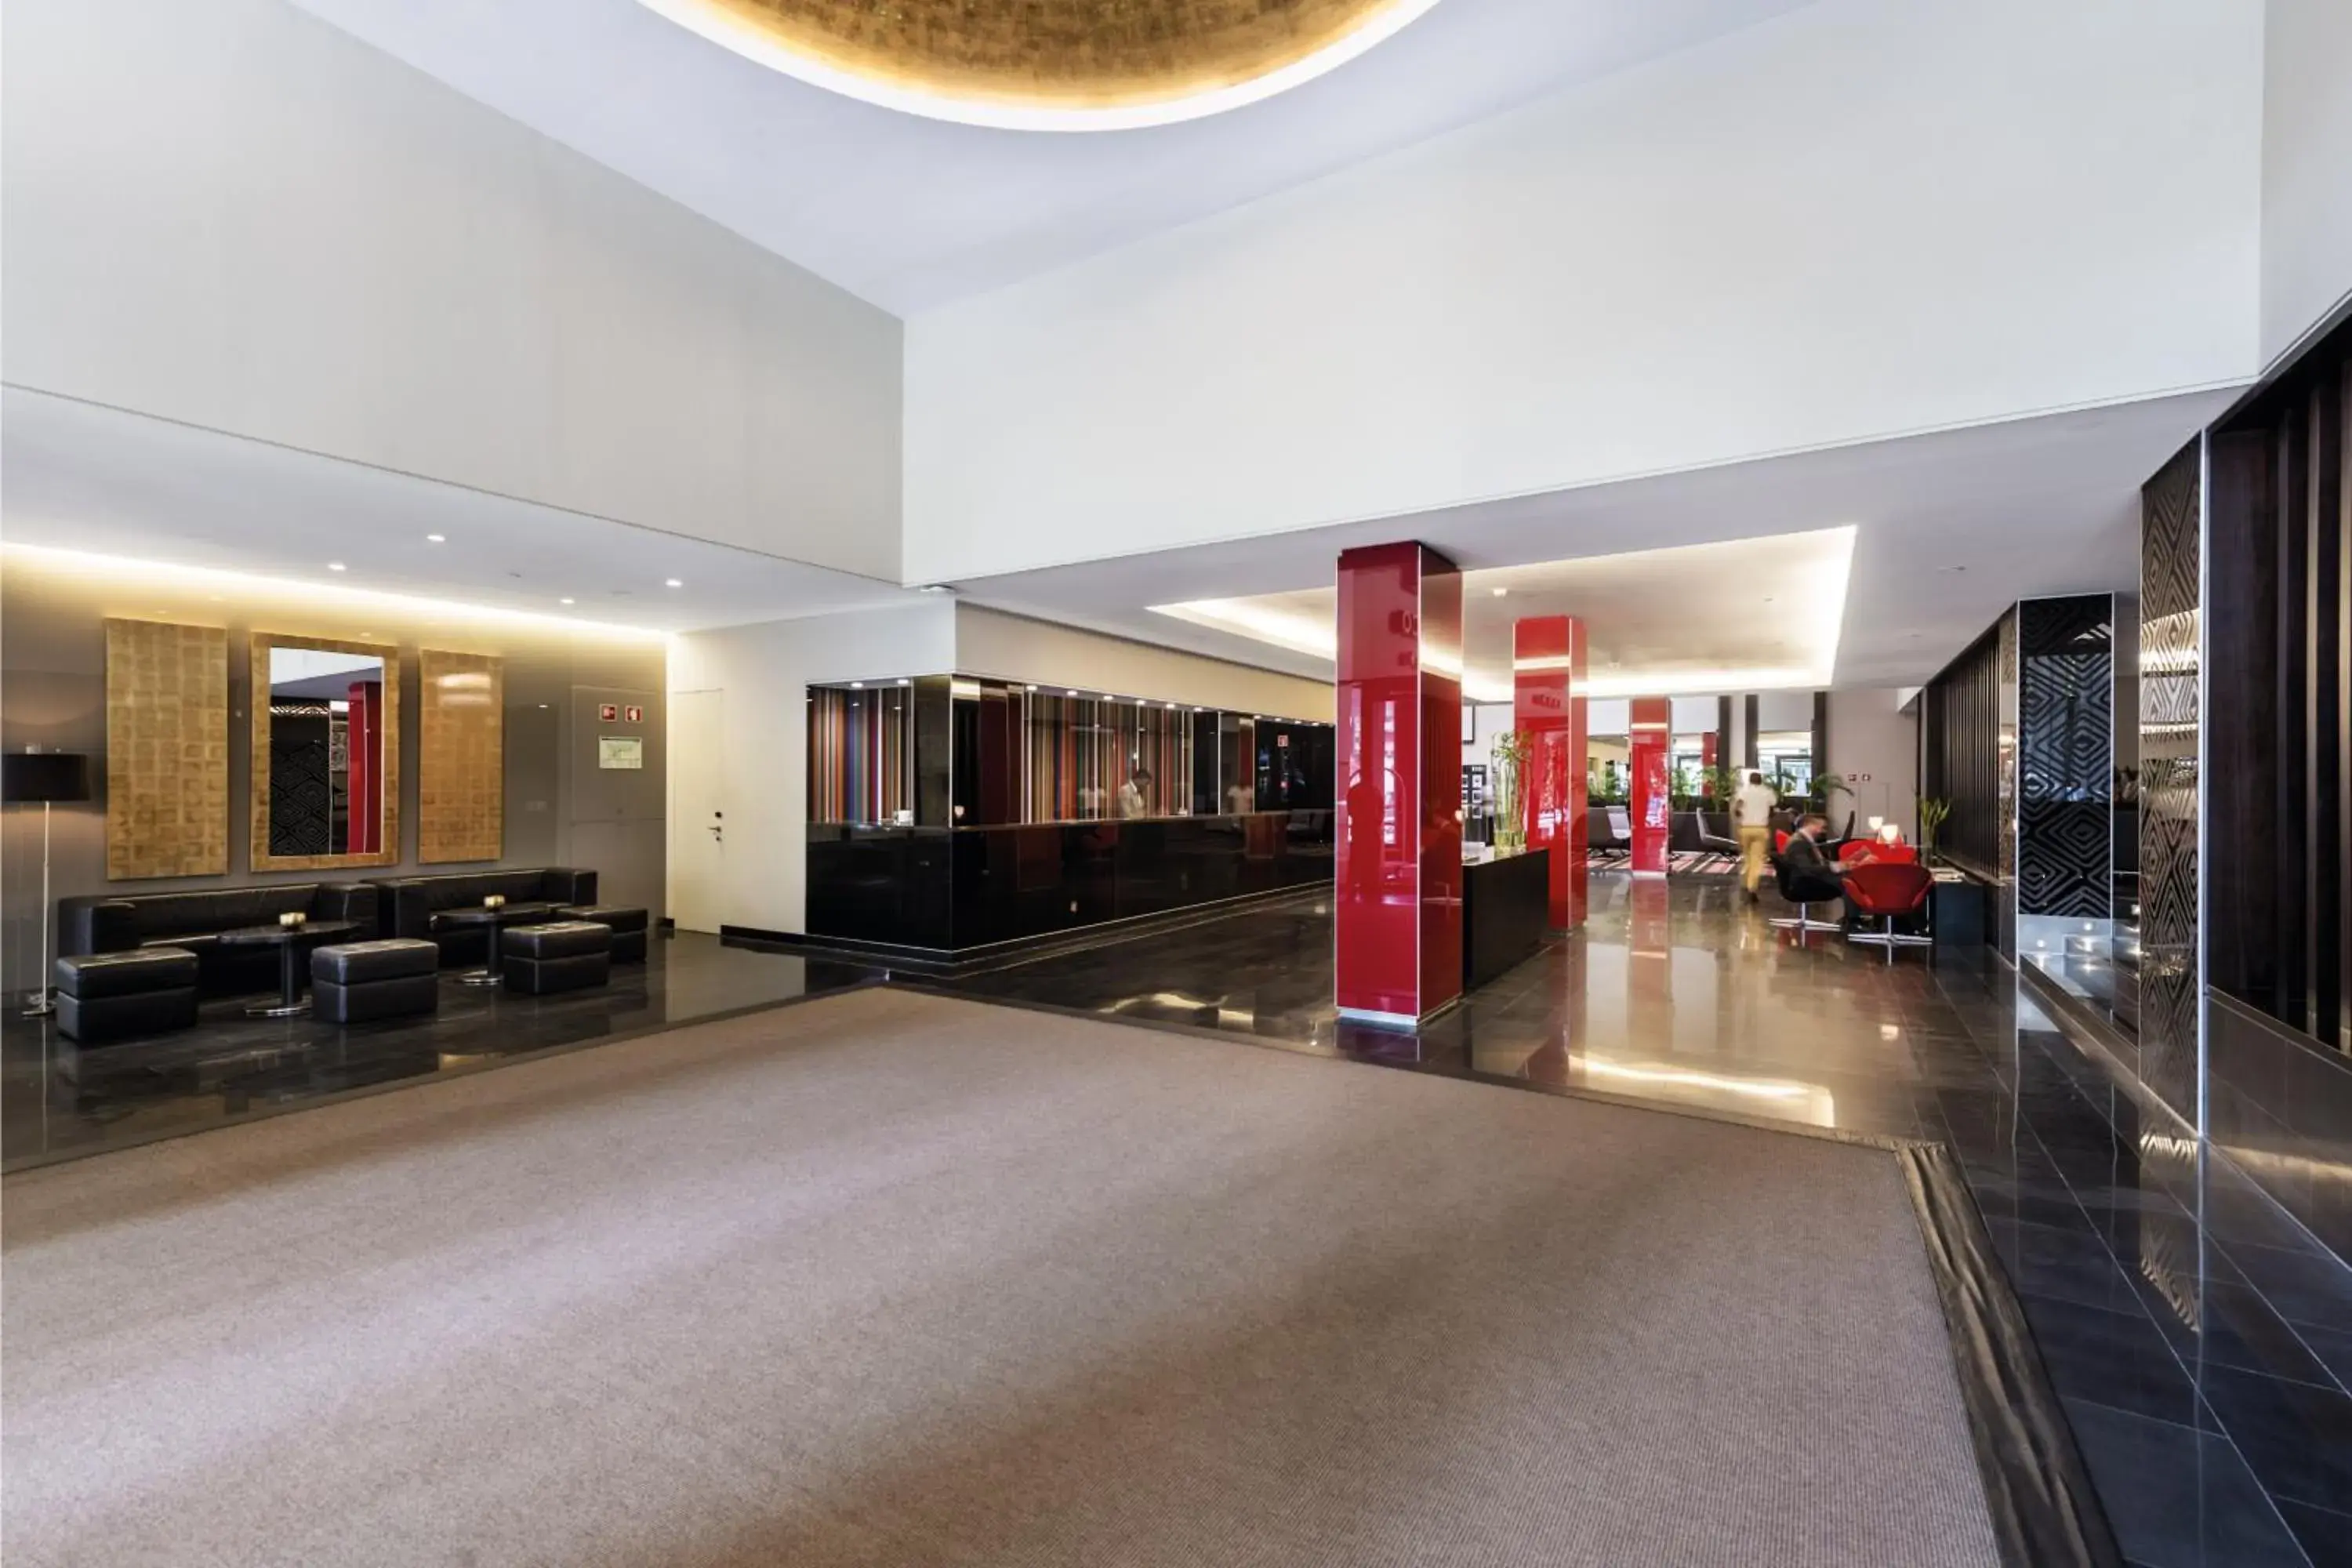 Lobby or reception in Hotel Tr¿pico